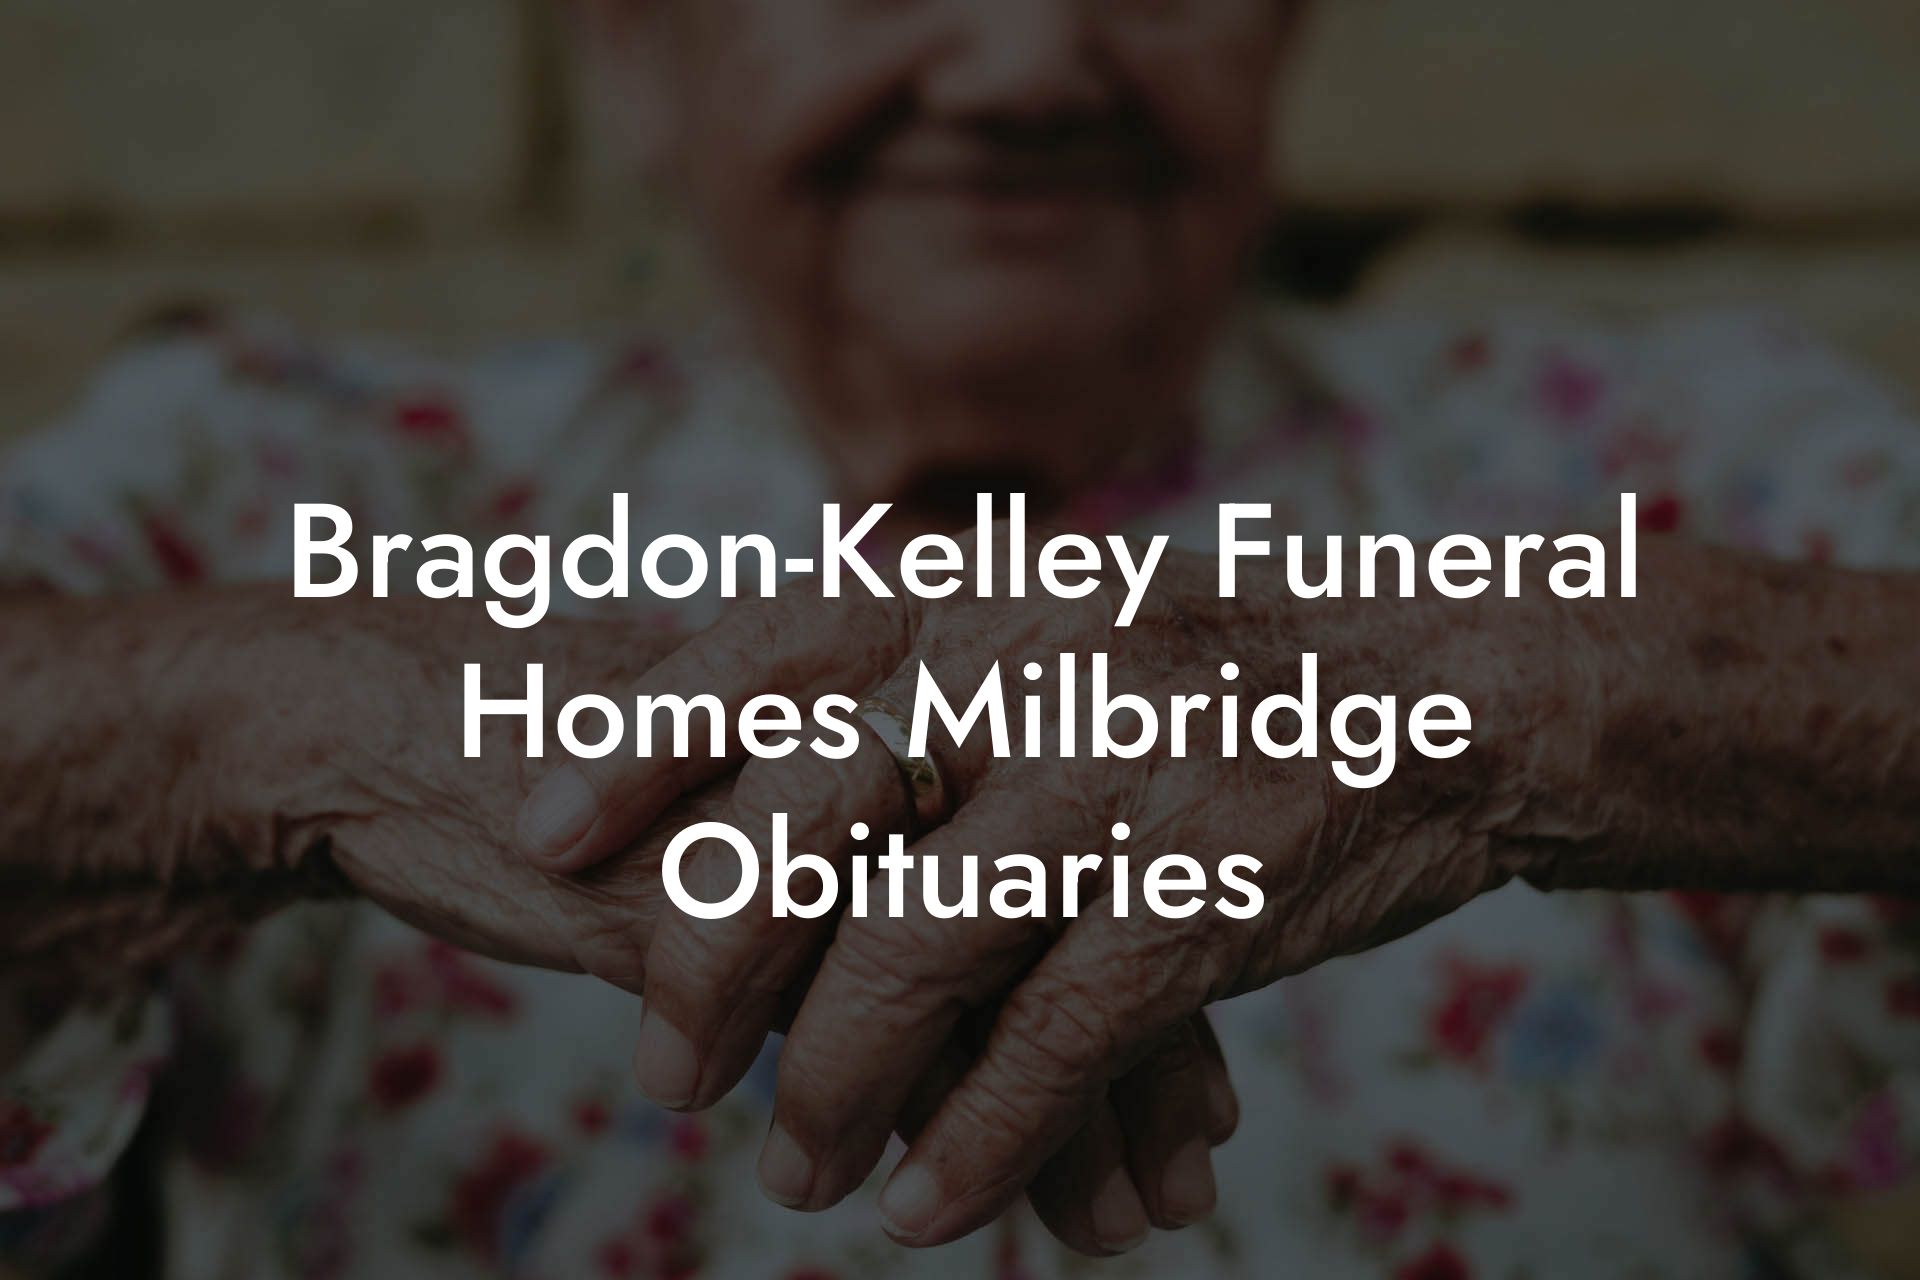 Bragdon-Kelley Funeral Homes Milbridge Obituaries